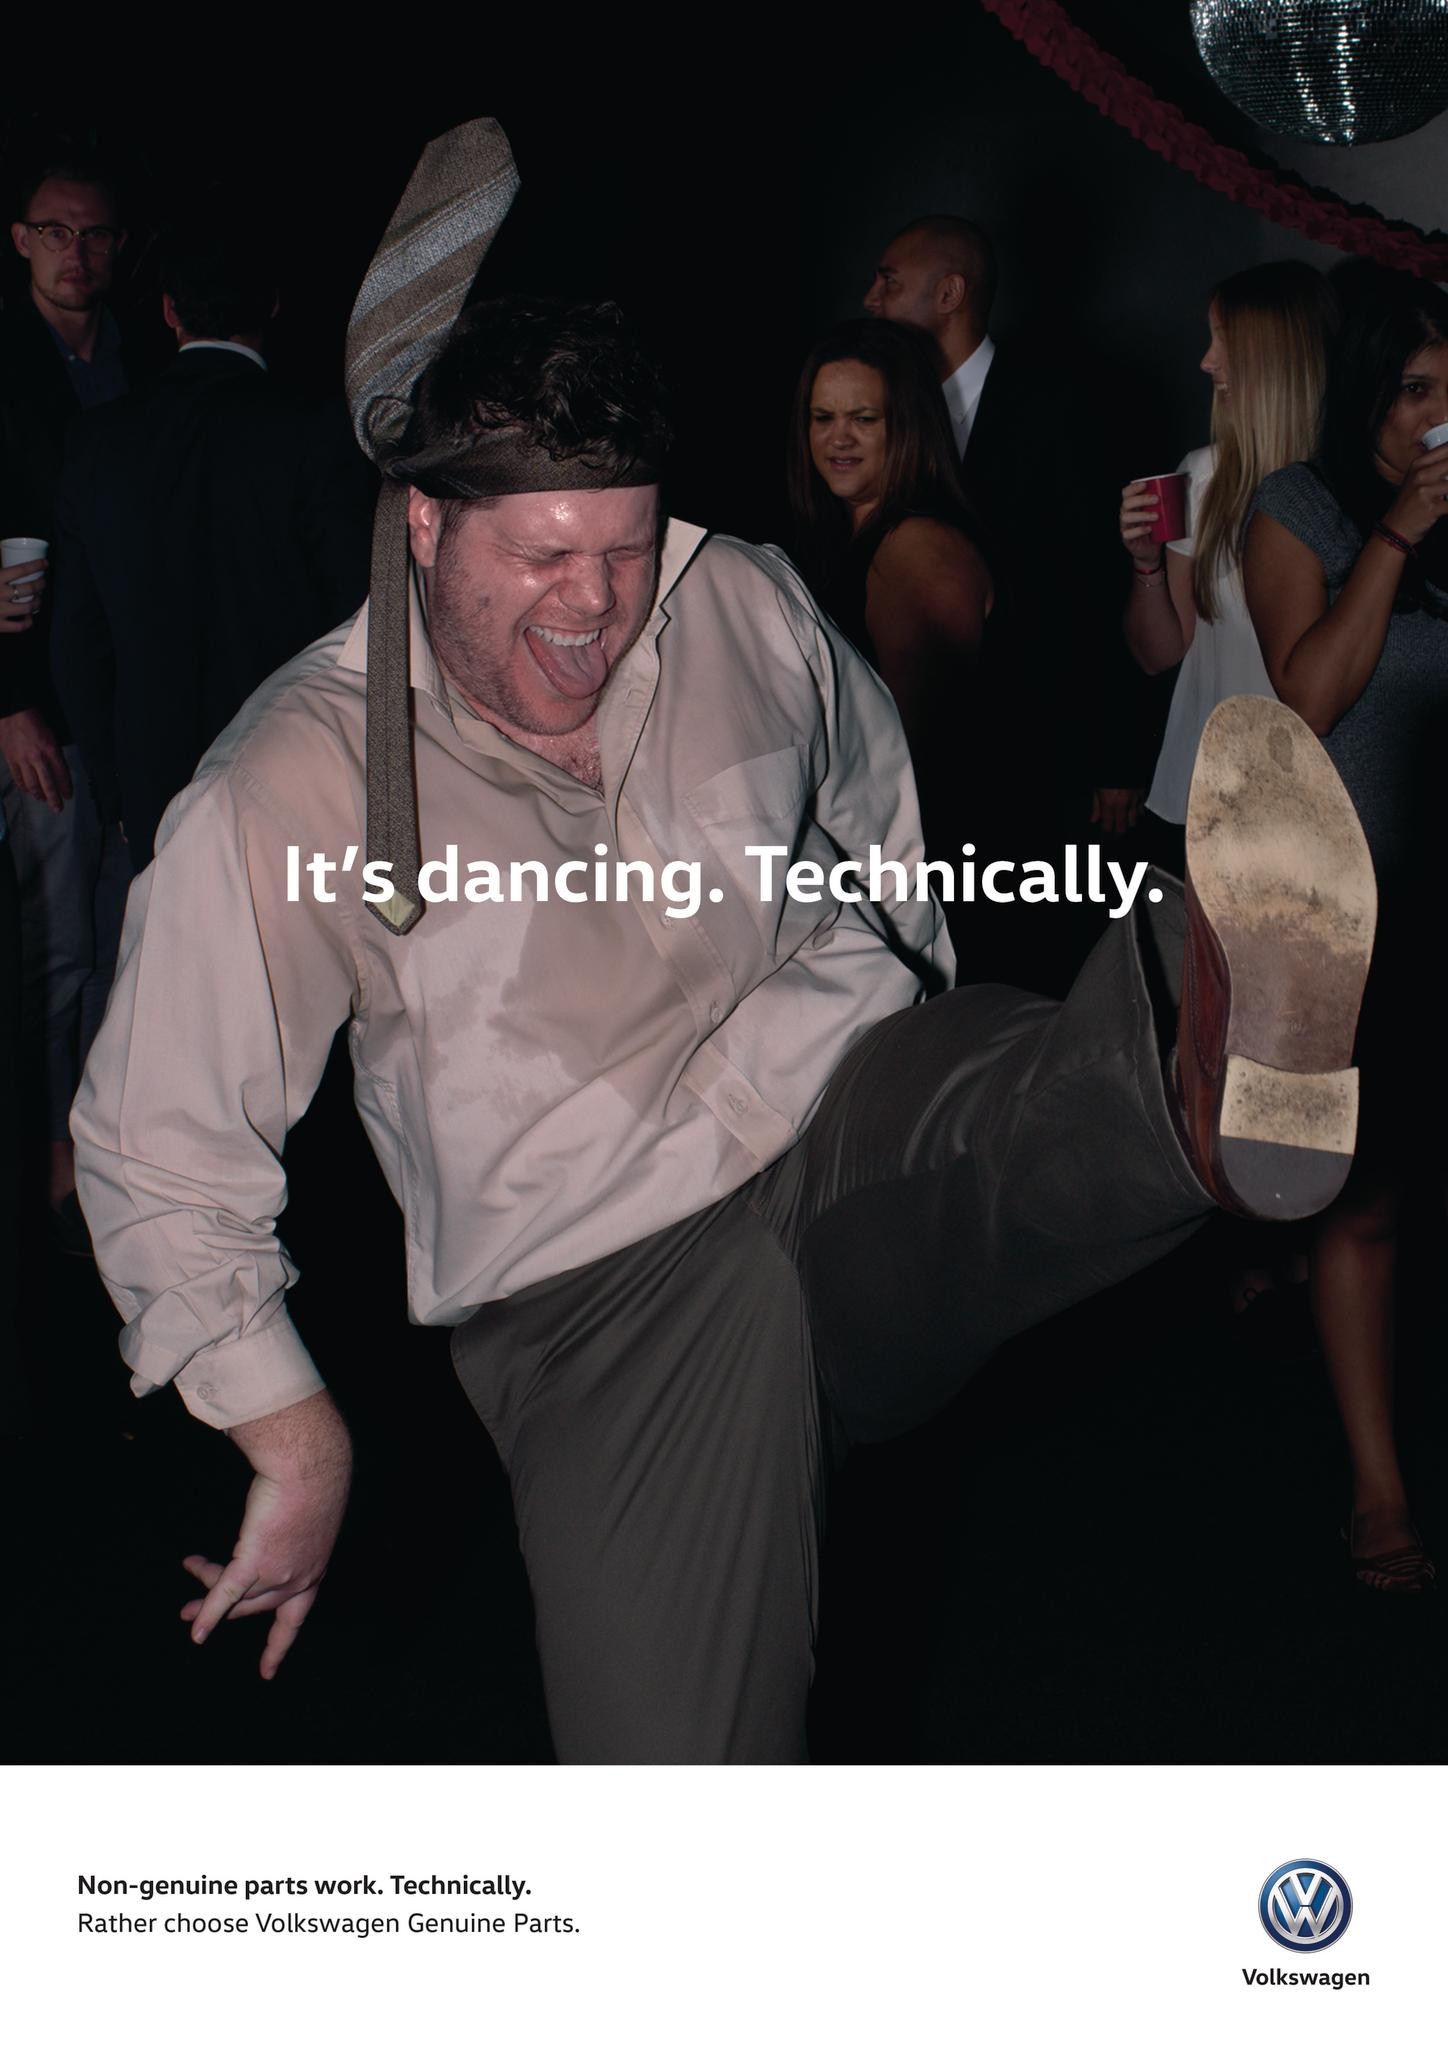 TECHNICALLY DANCING